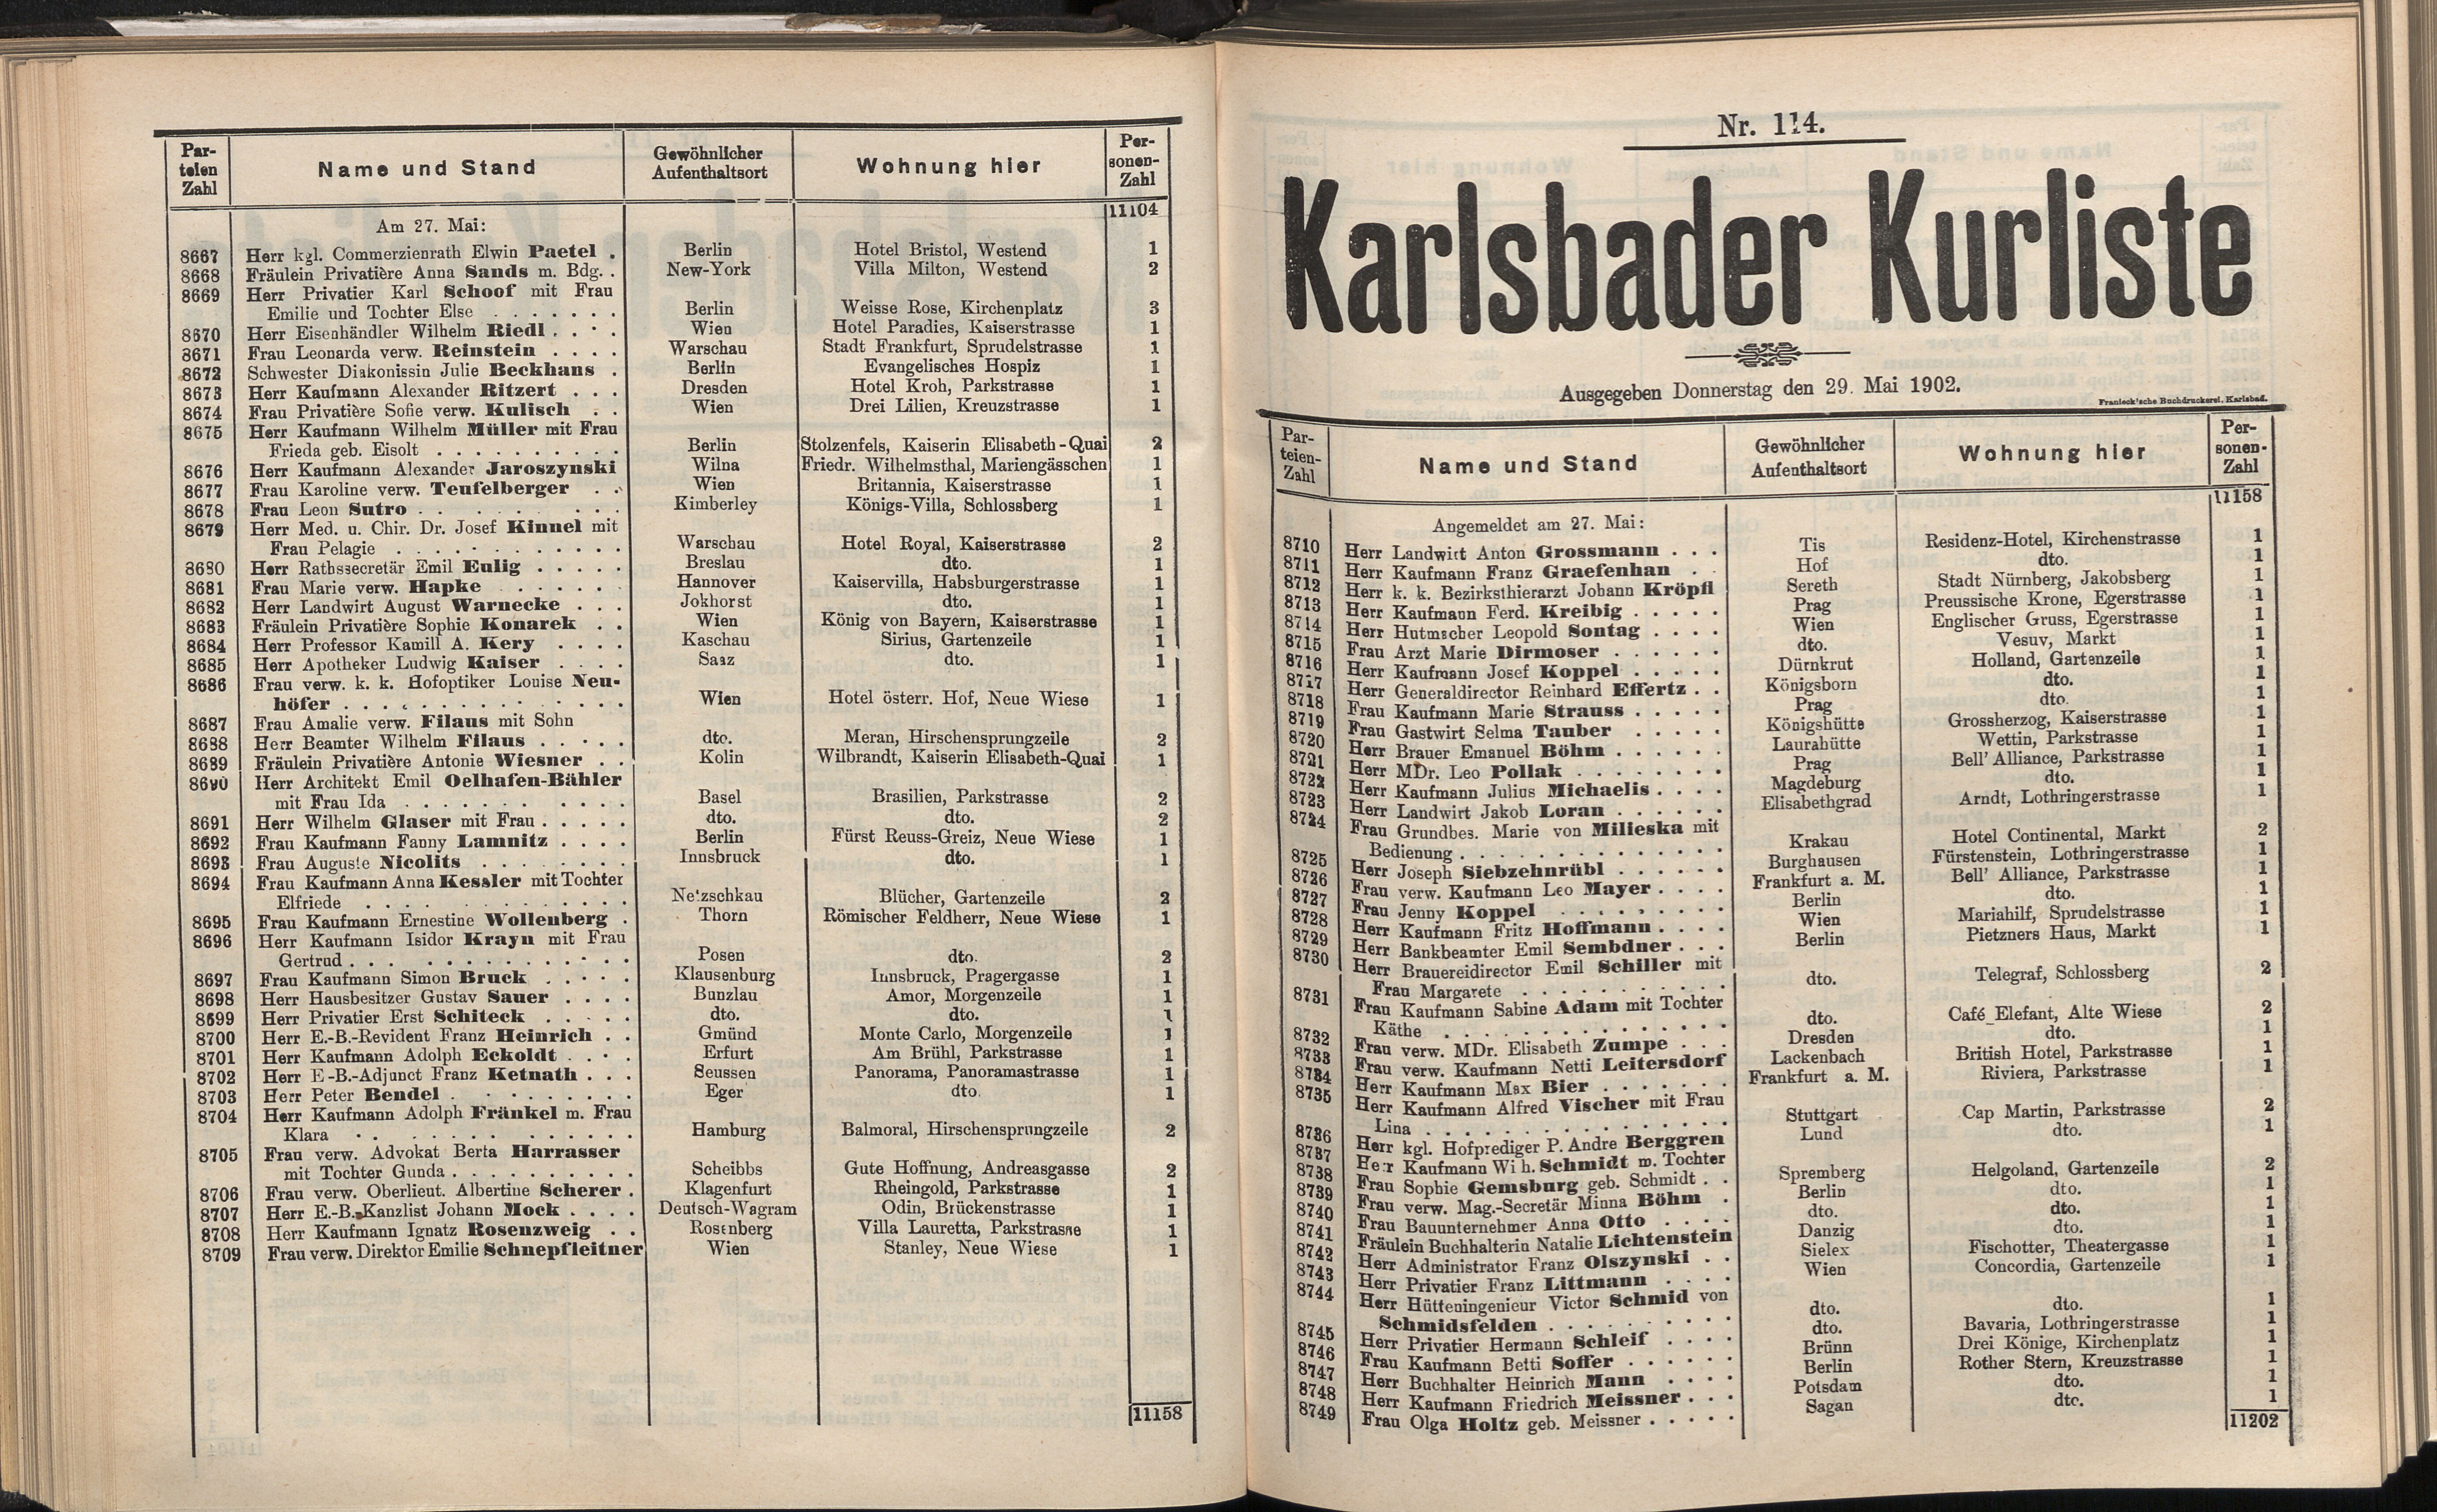 137. soap-kv_knihovna_karlsbader-kurliste-1902_1380